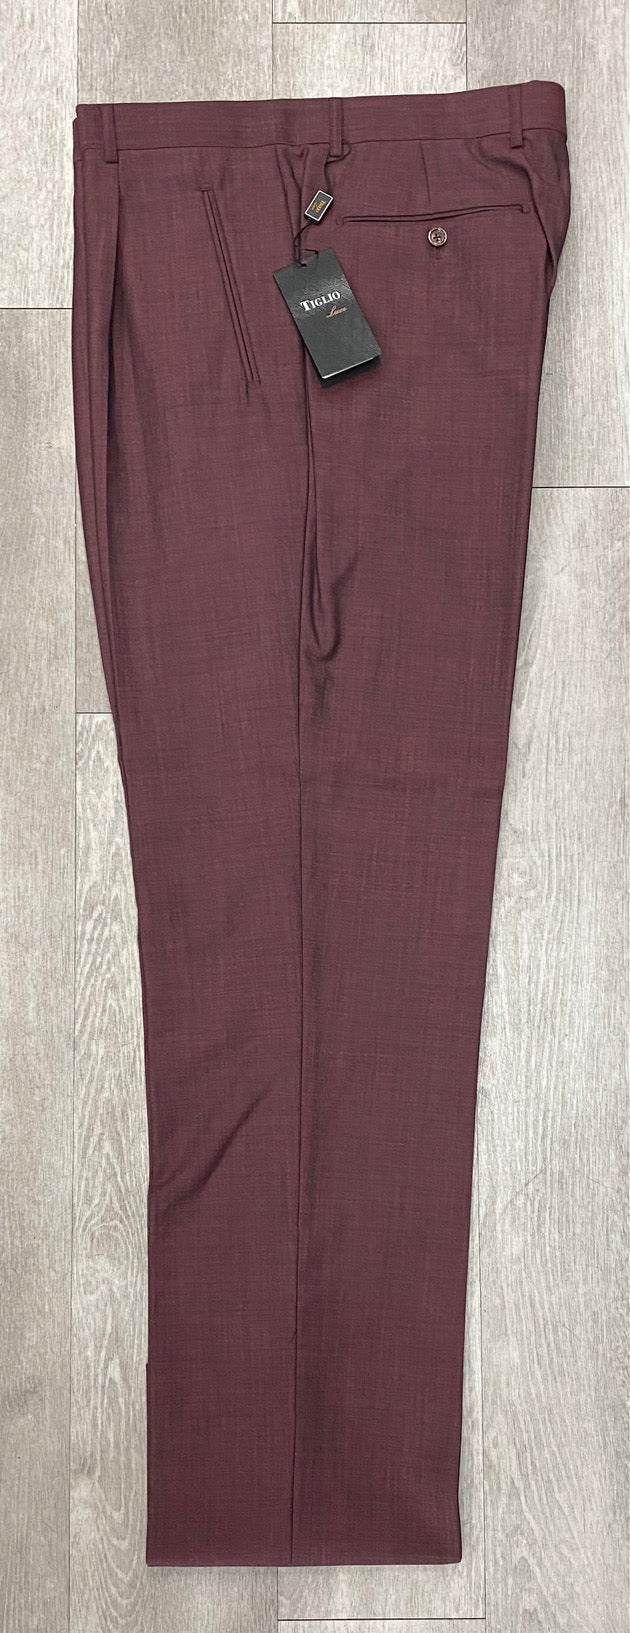 Tiglio Luxe 2521 Comfort Fit Single Pleated Pants 18+ Inch Leg TIG4102B Burgundy